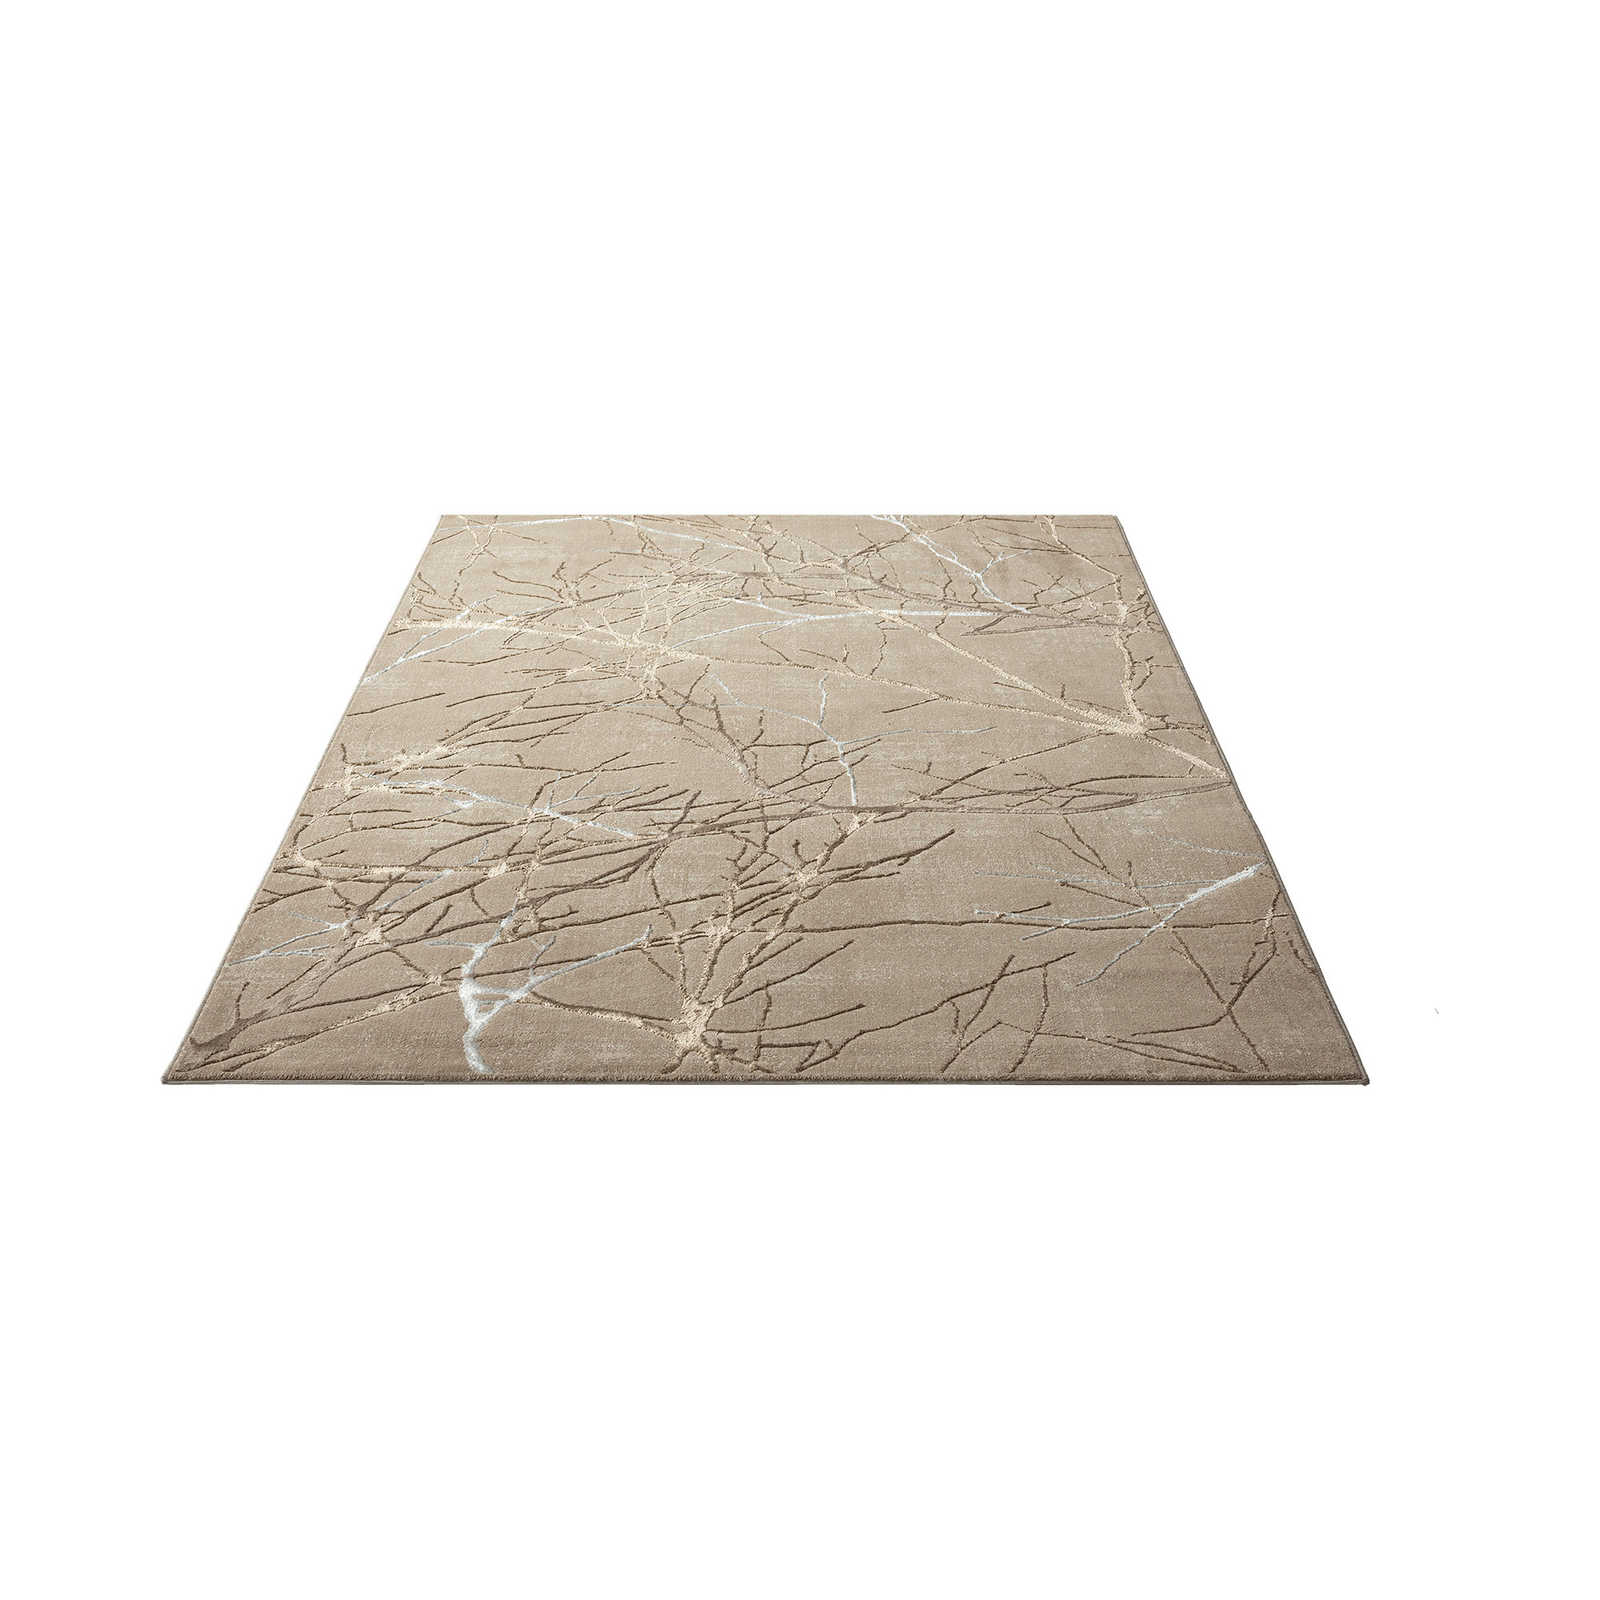 Pile carpet in soft beige - 230 x 160 cm
